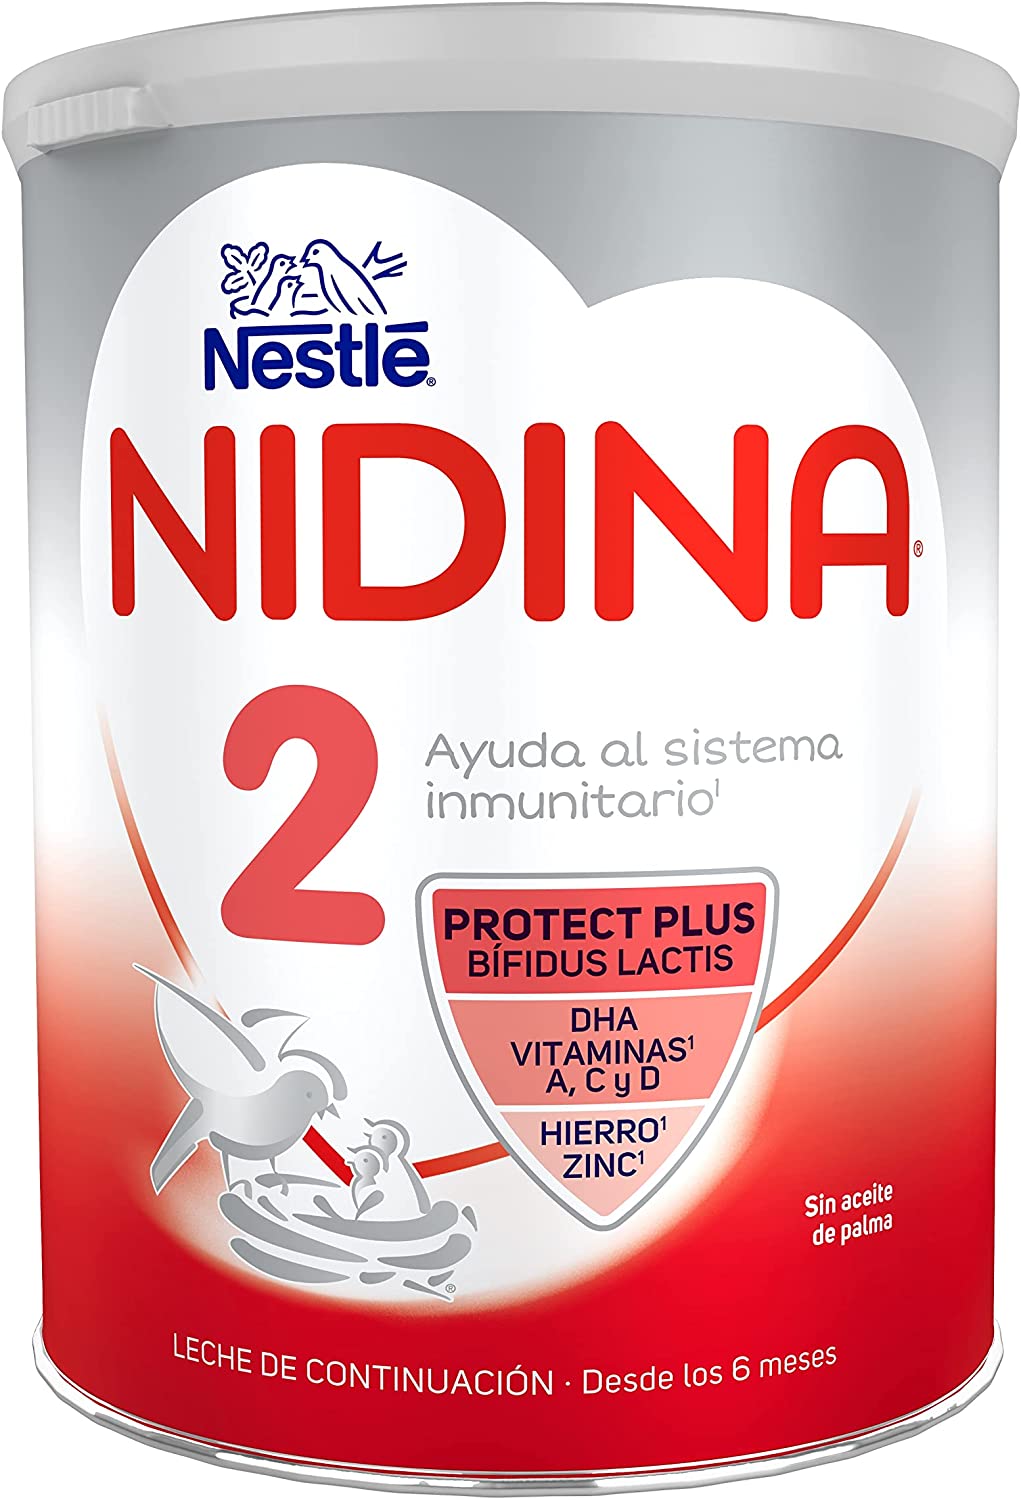 NIDINA 1 PREMIUM 800 G